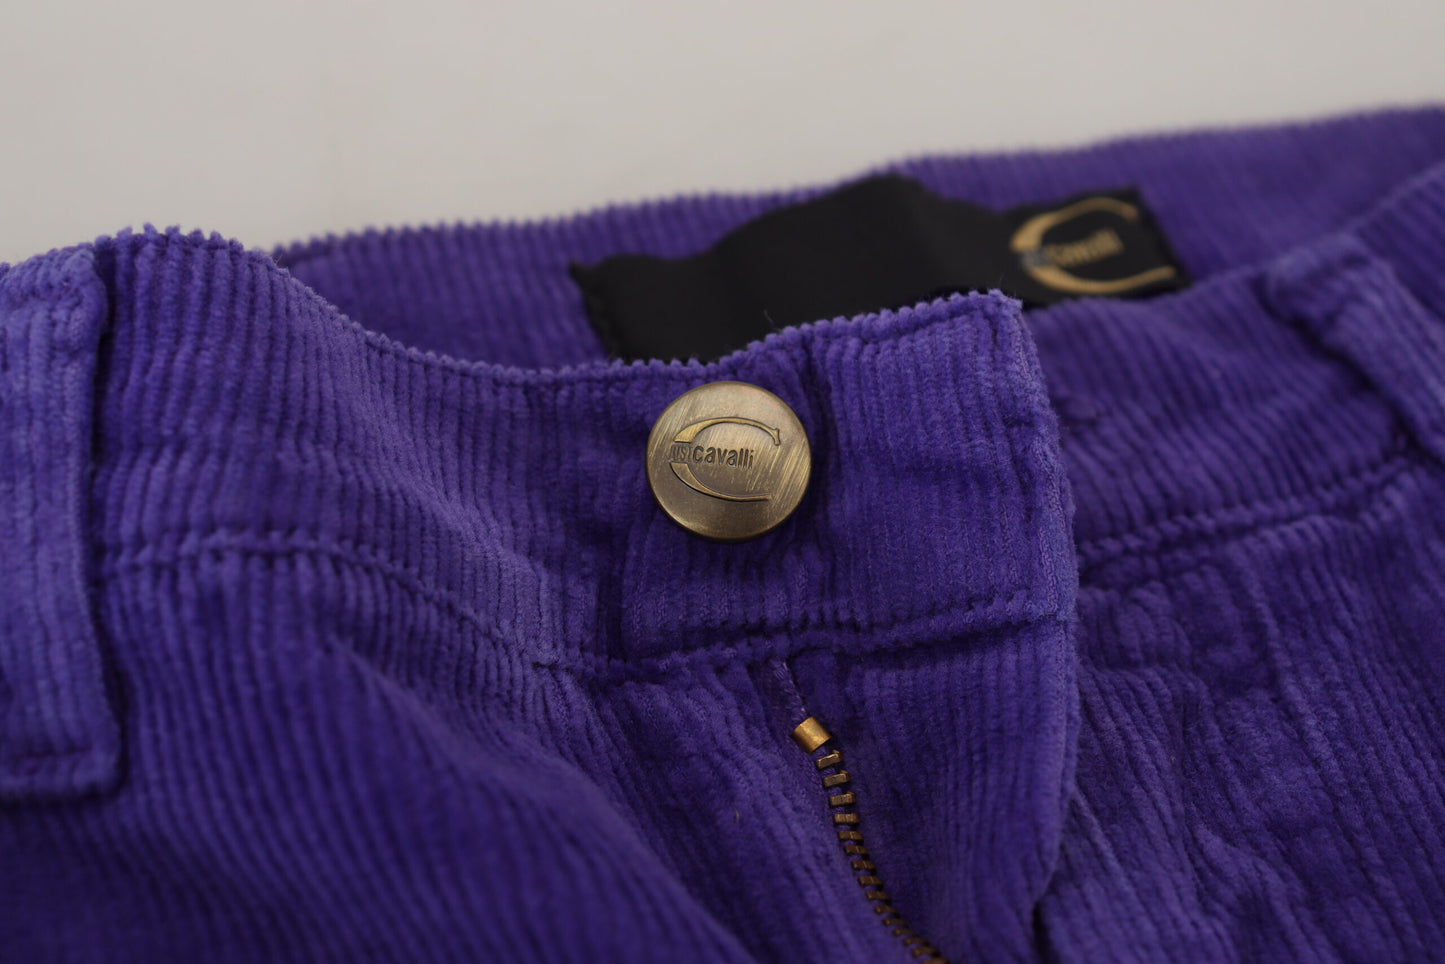 Elegant Purple Corduroy Straight Fit Pants